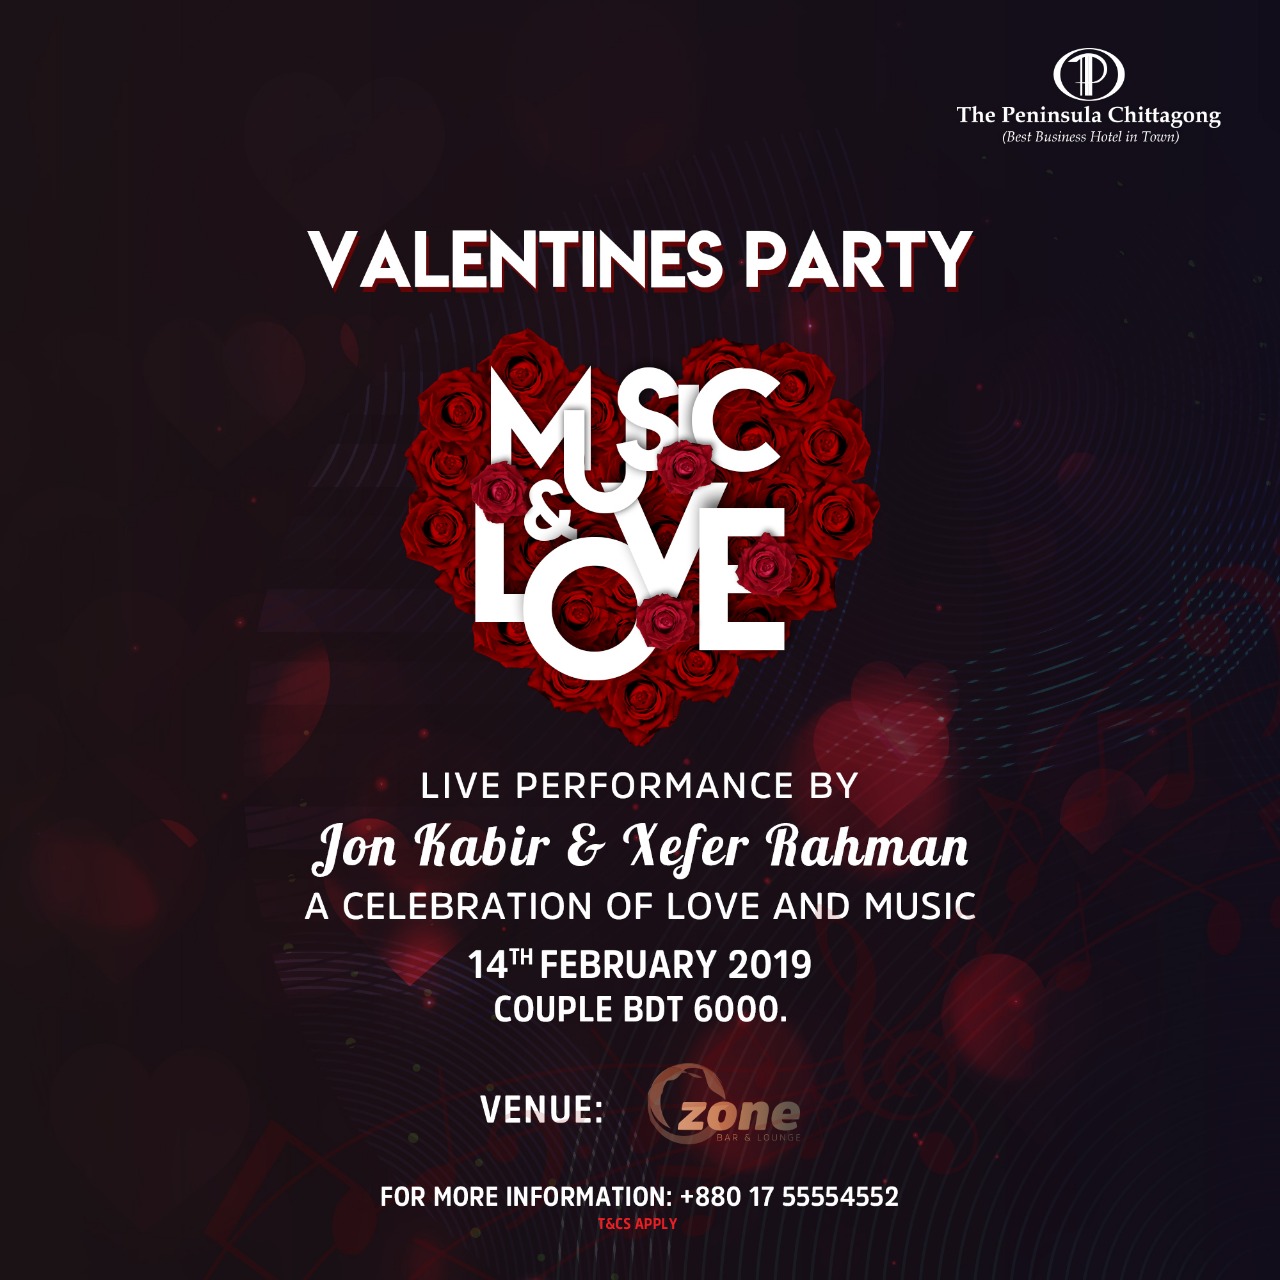 Valentine's Party - Music & Love with Jon Kabir & Xefar Rahman 